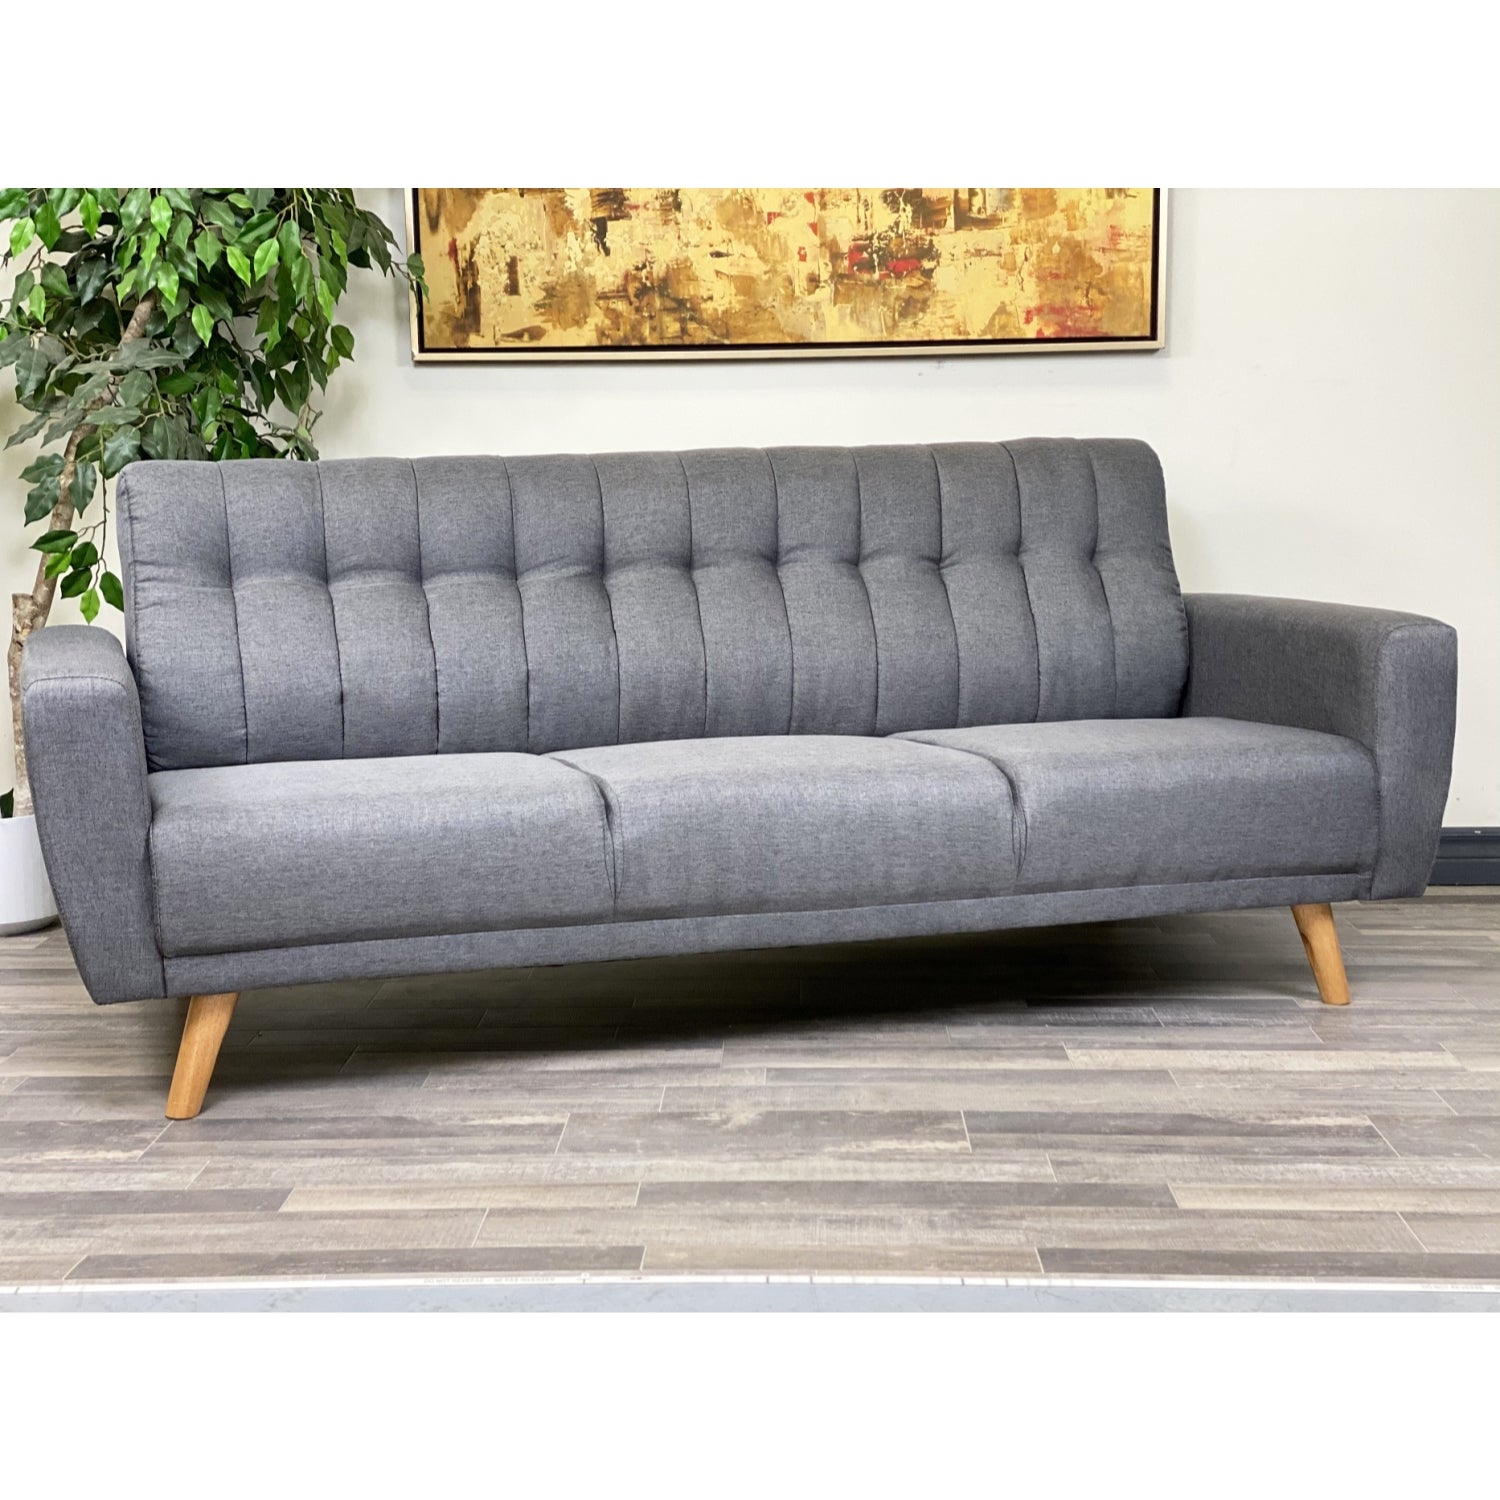 ViscoLogic MOCA Contemporary New Mid-Century Tufted Style Fabric Upholstered Modern Living Room Sofa (Dark Grey)